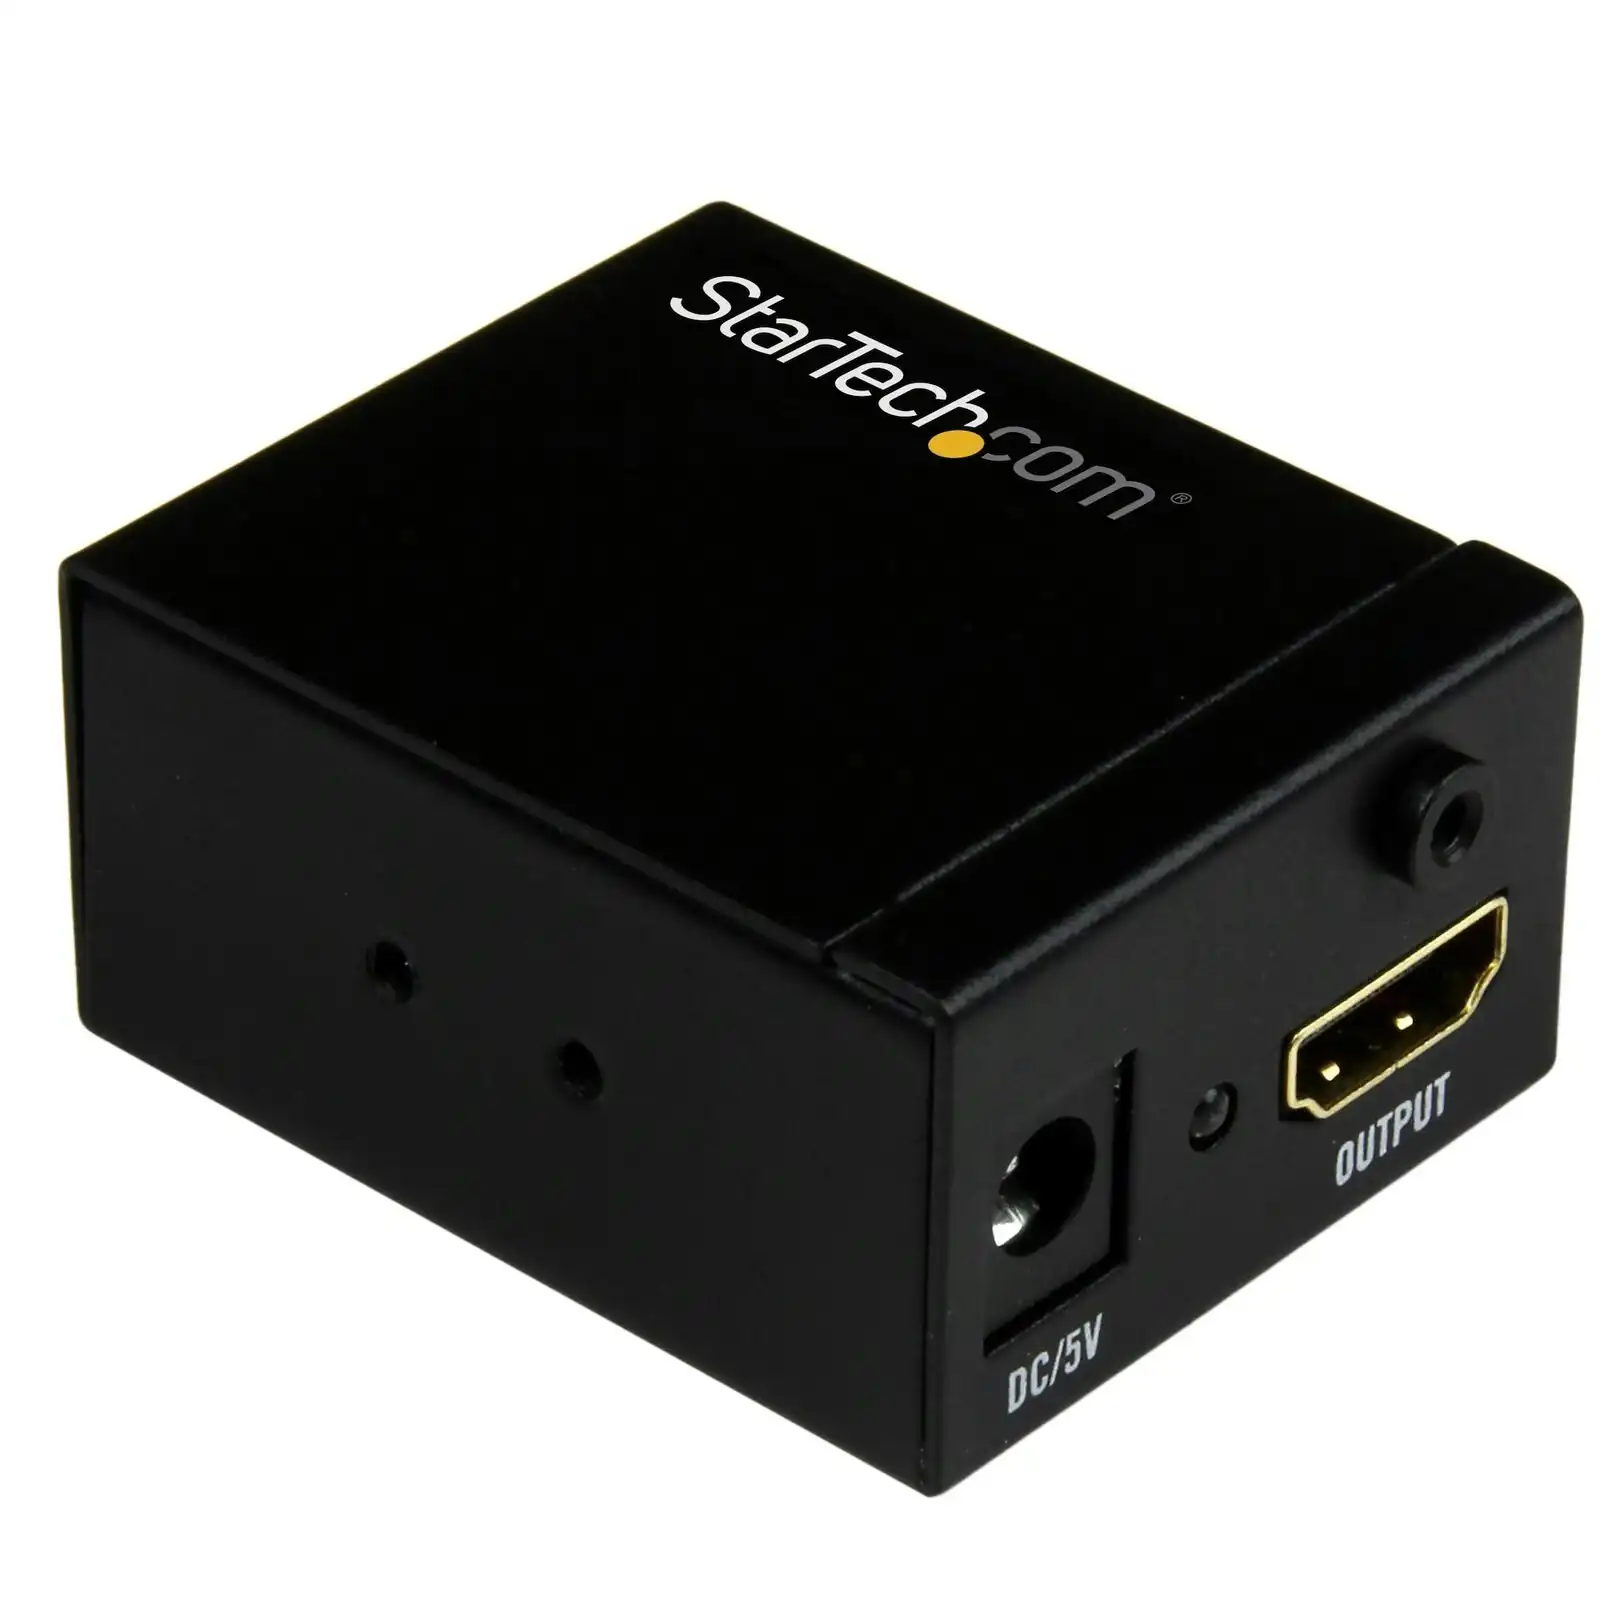 Star Tech HDMI Signal Extender Booster 1080p Discreet For Office/Classroom Black